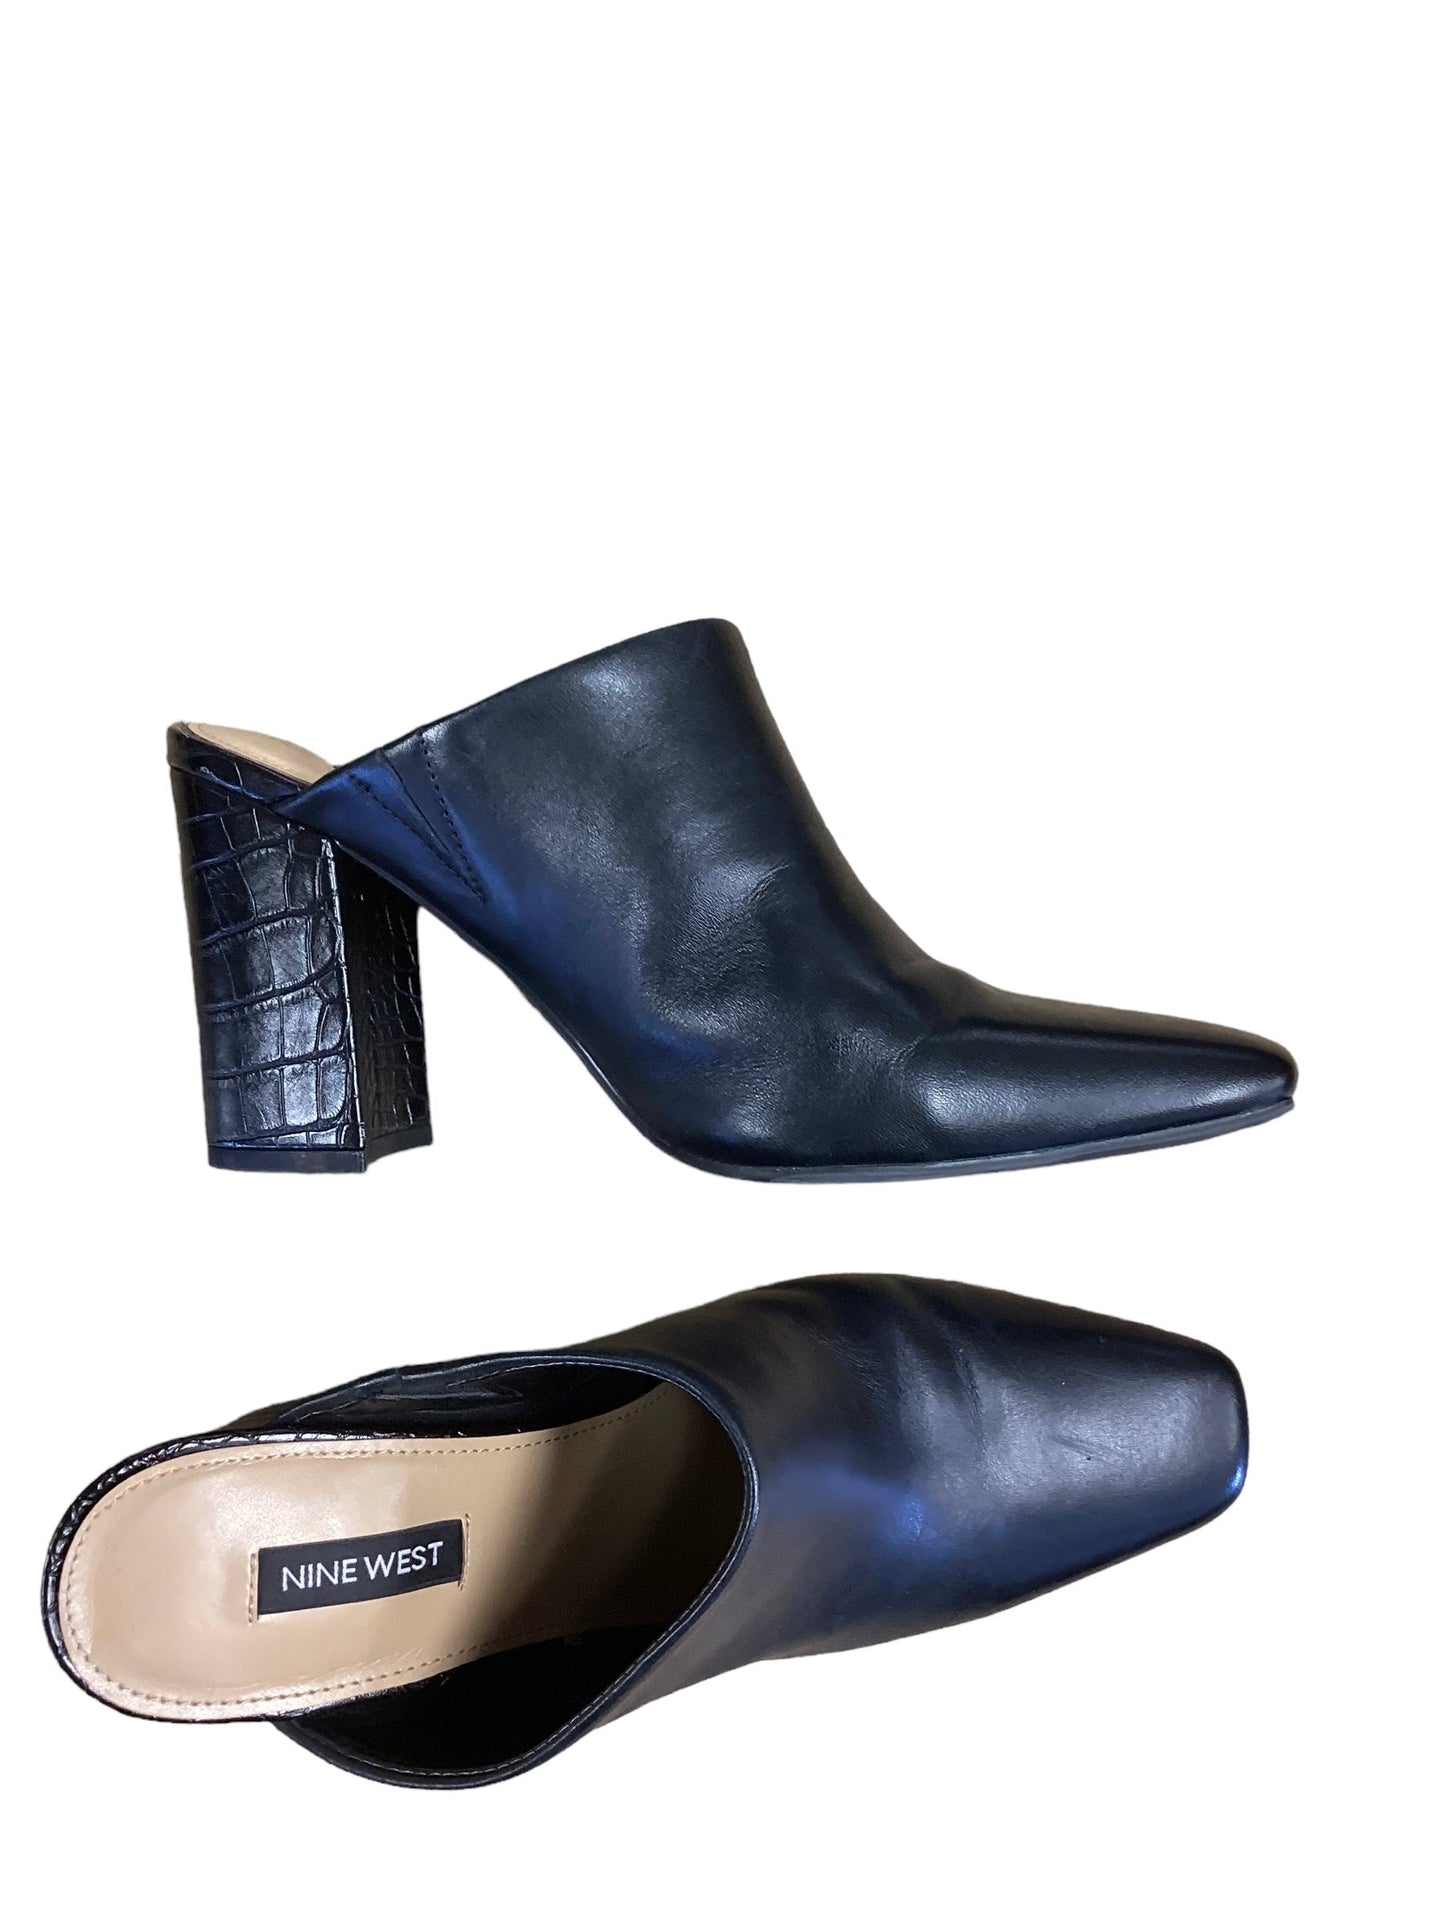 Black Shoes Heels Block Nine West, Size 8.5